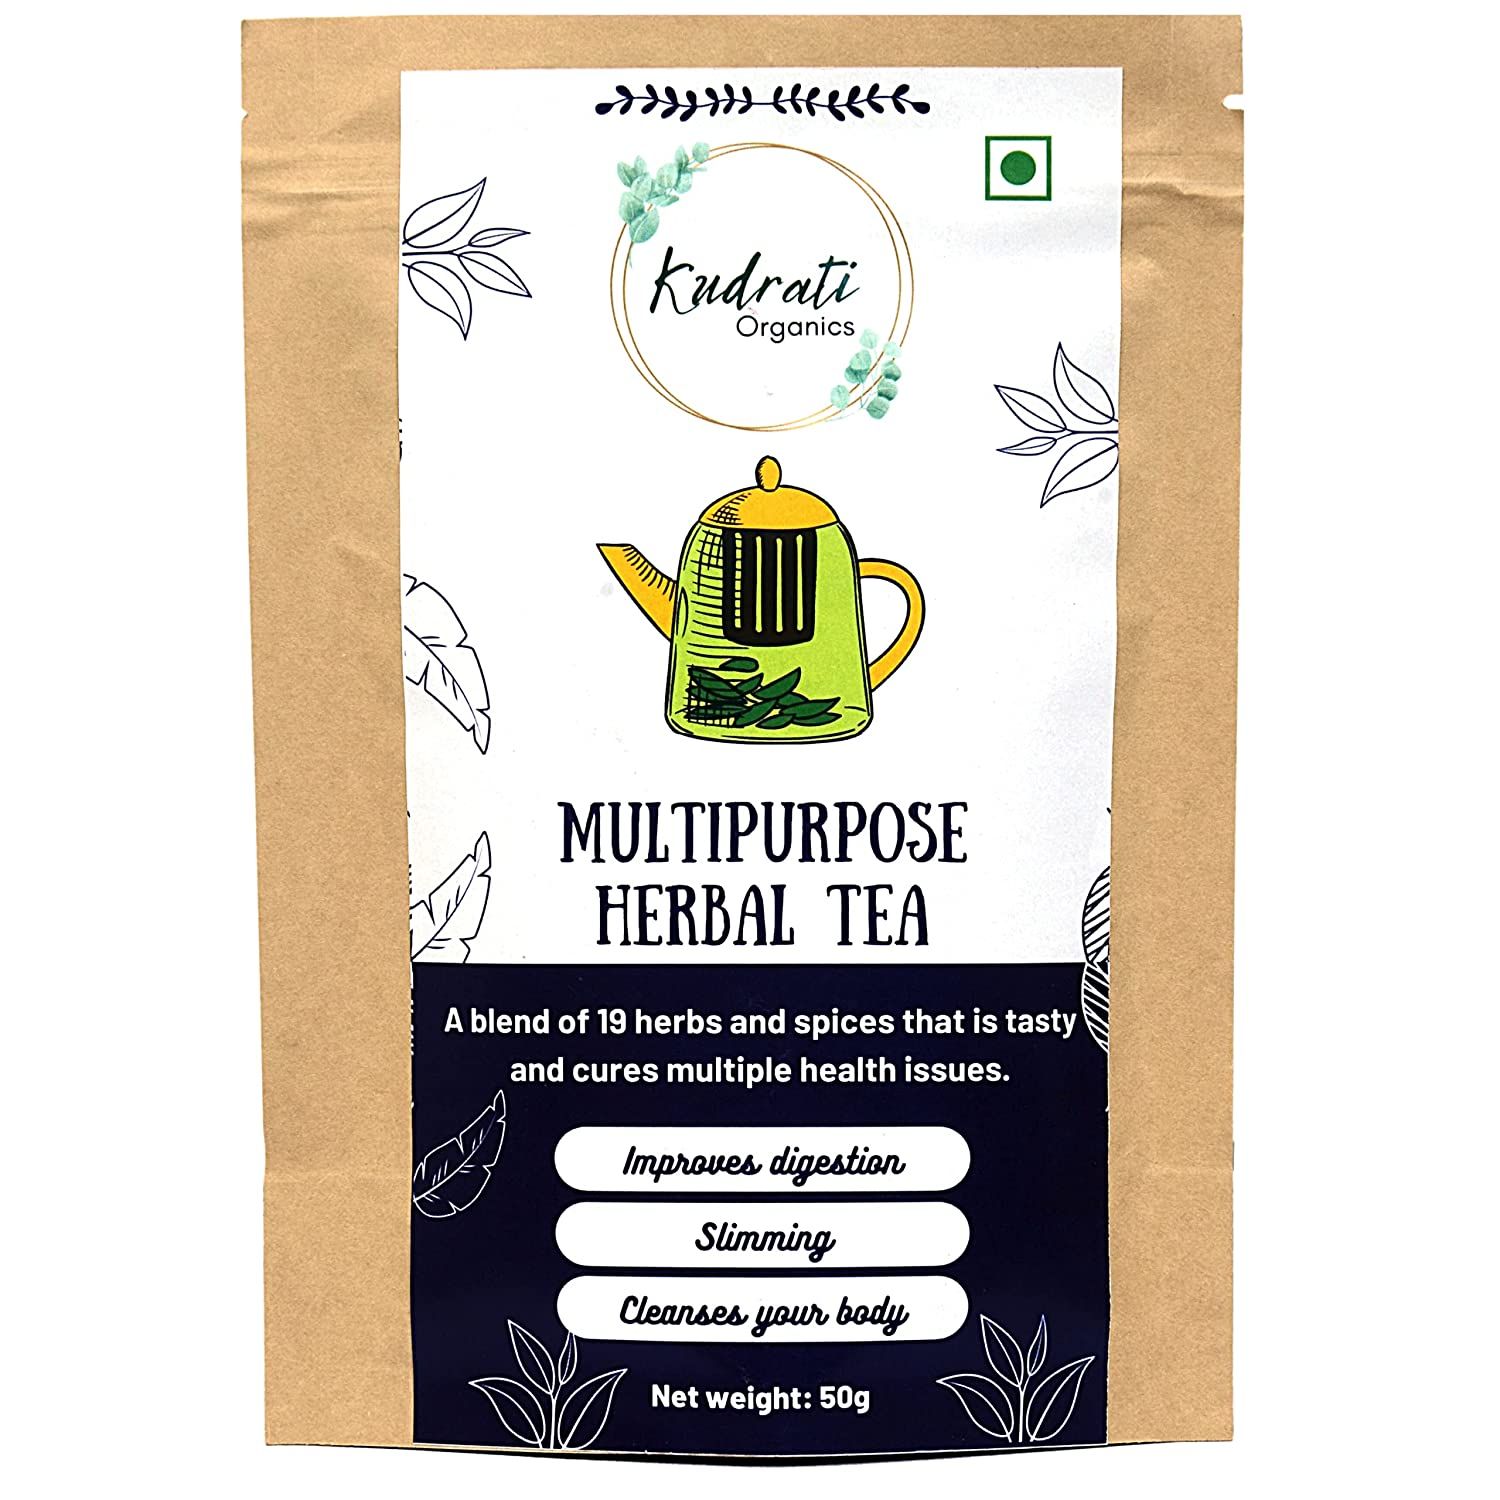 Kudrati Organics Multipurpose Herbal Tea Image